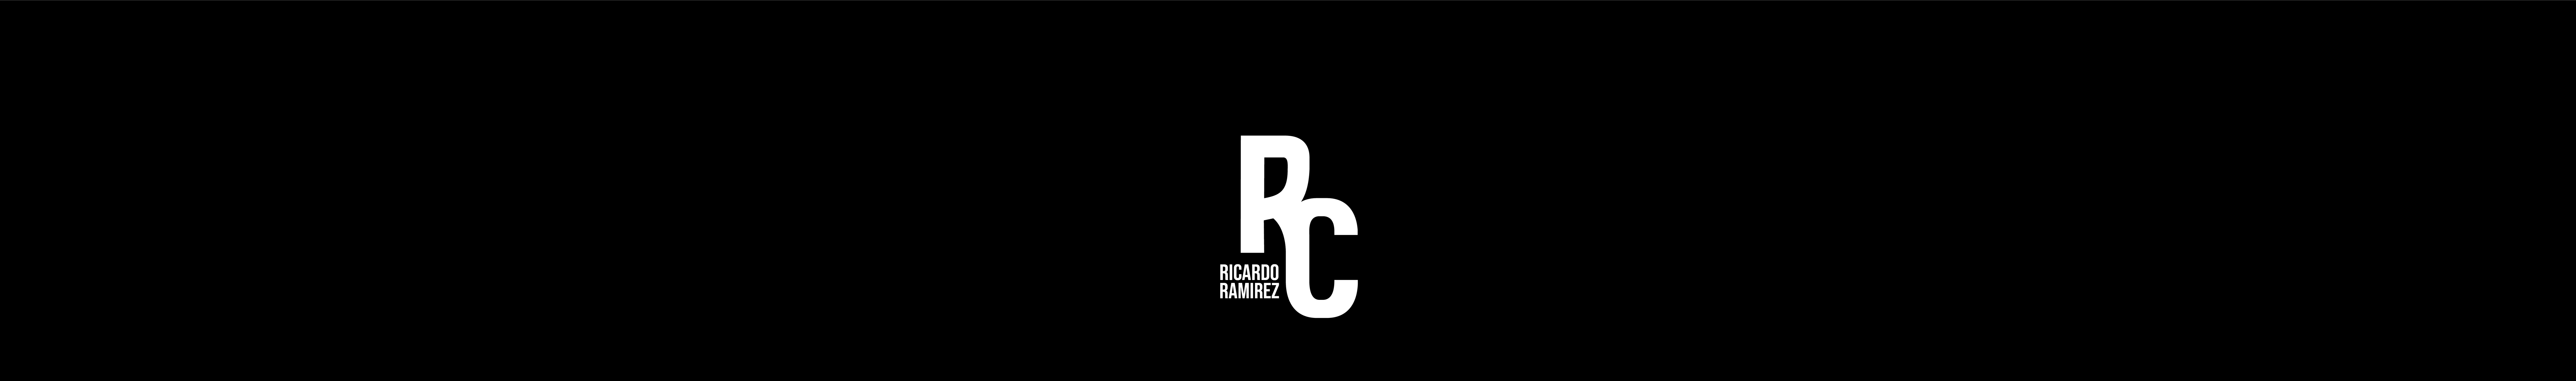 Ricardo Ramirez's profile banner